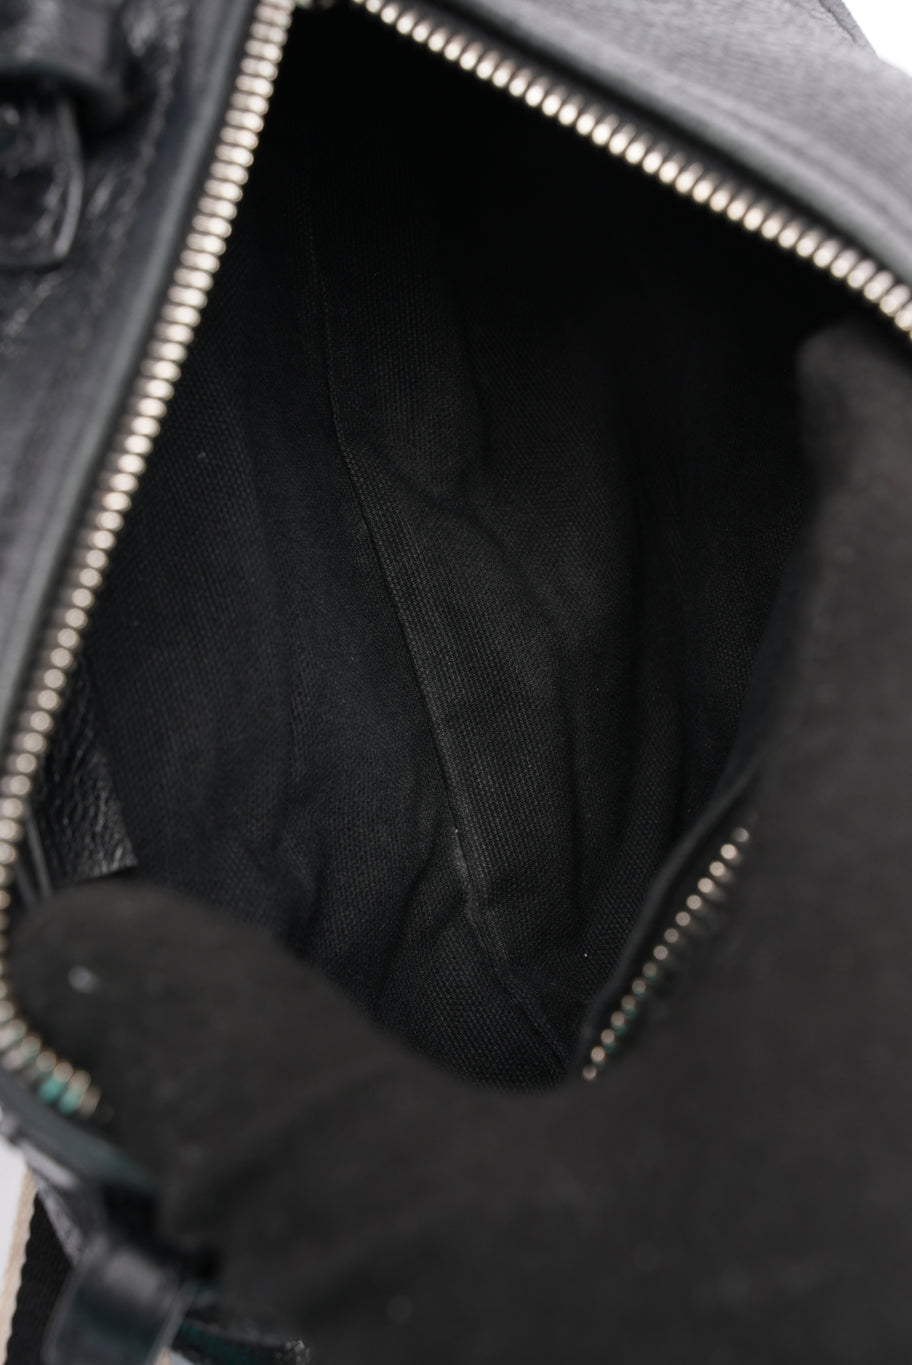 Pandora Bag Black Leather Small Image 9